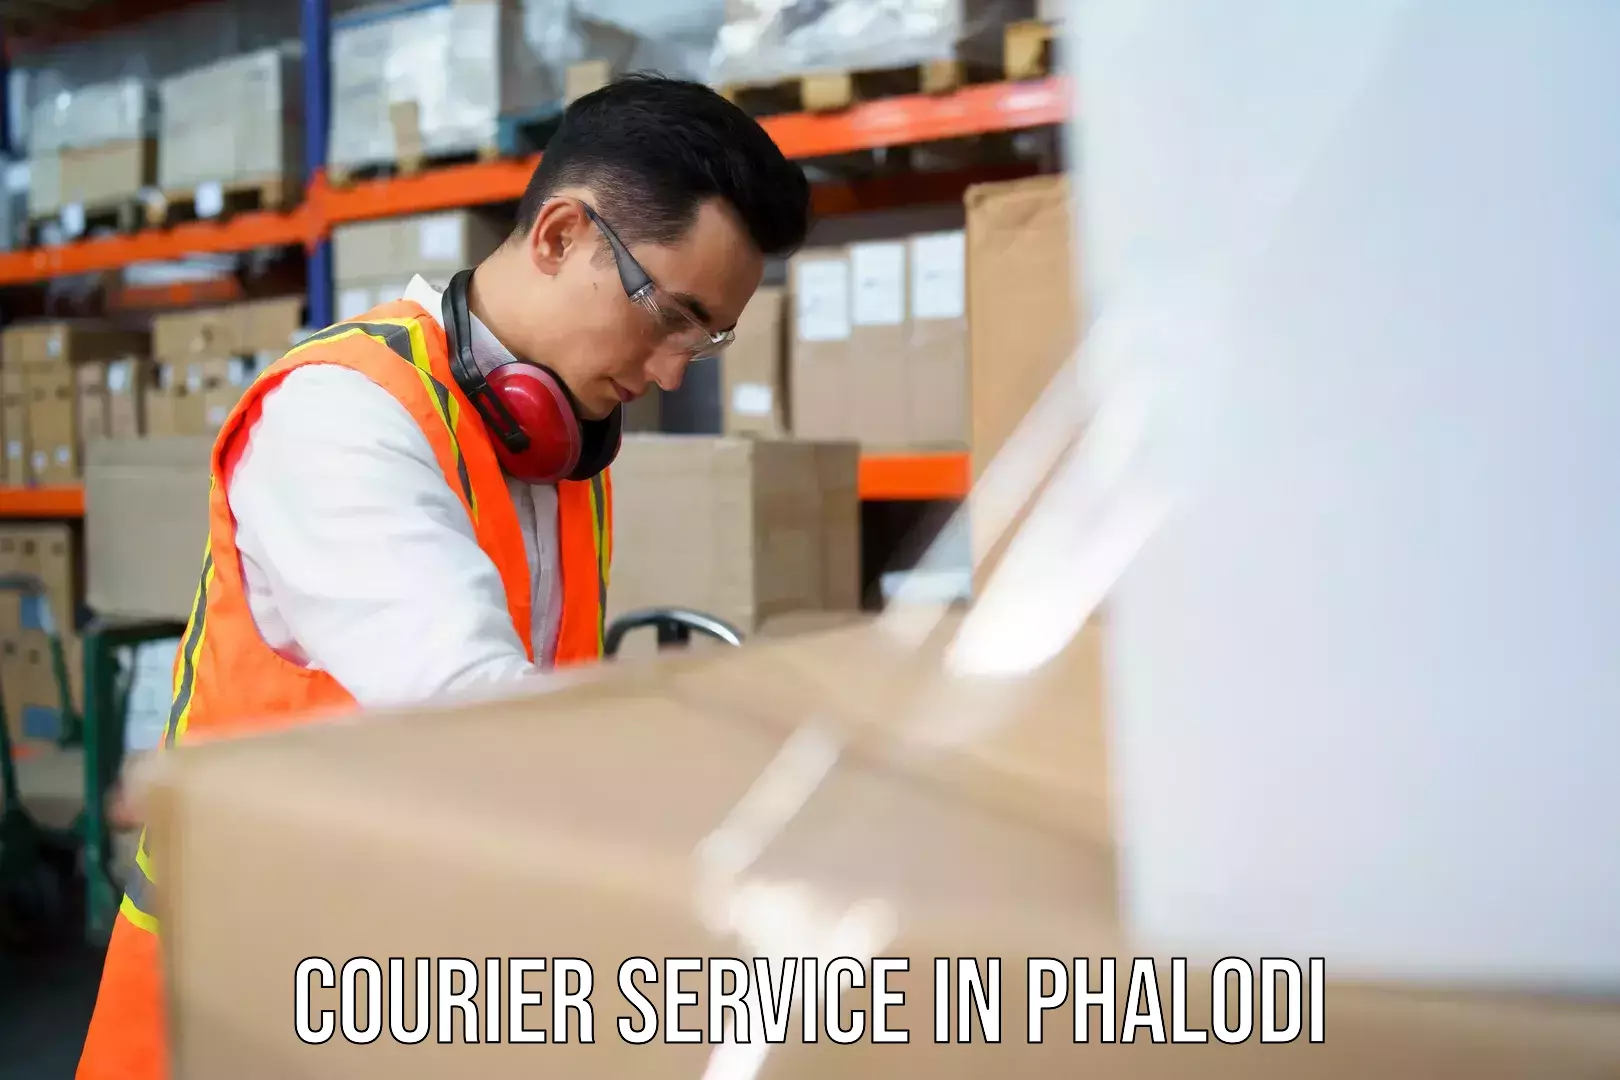 Quick dispatch service in Phalodi